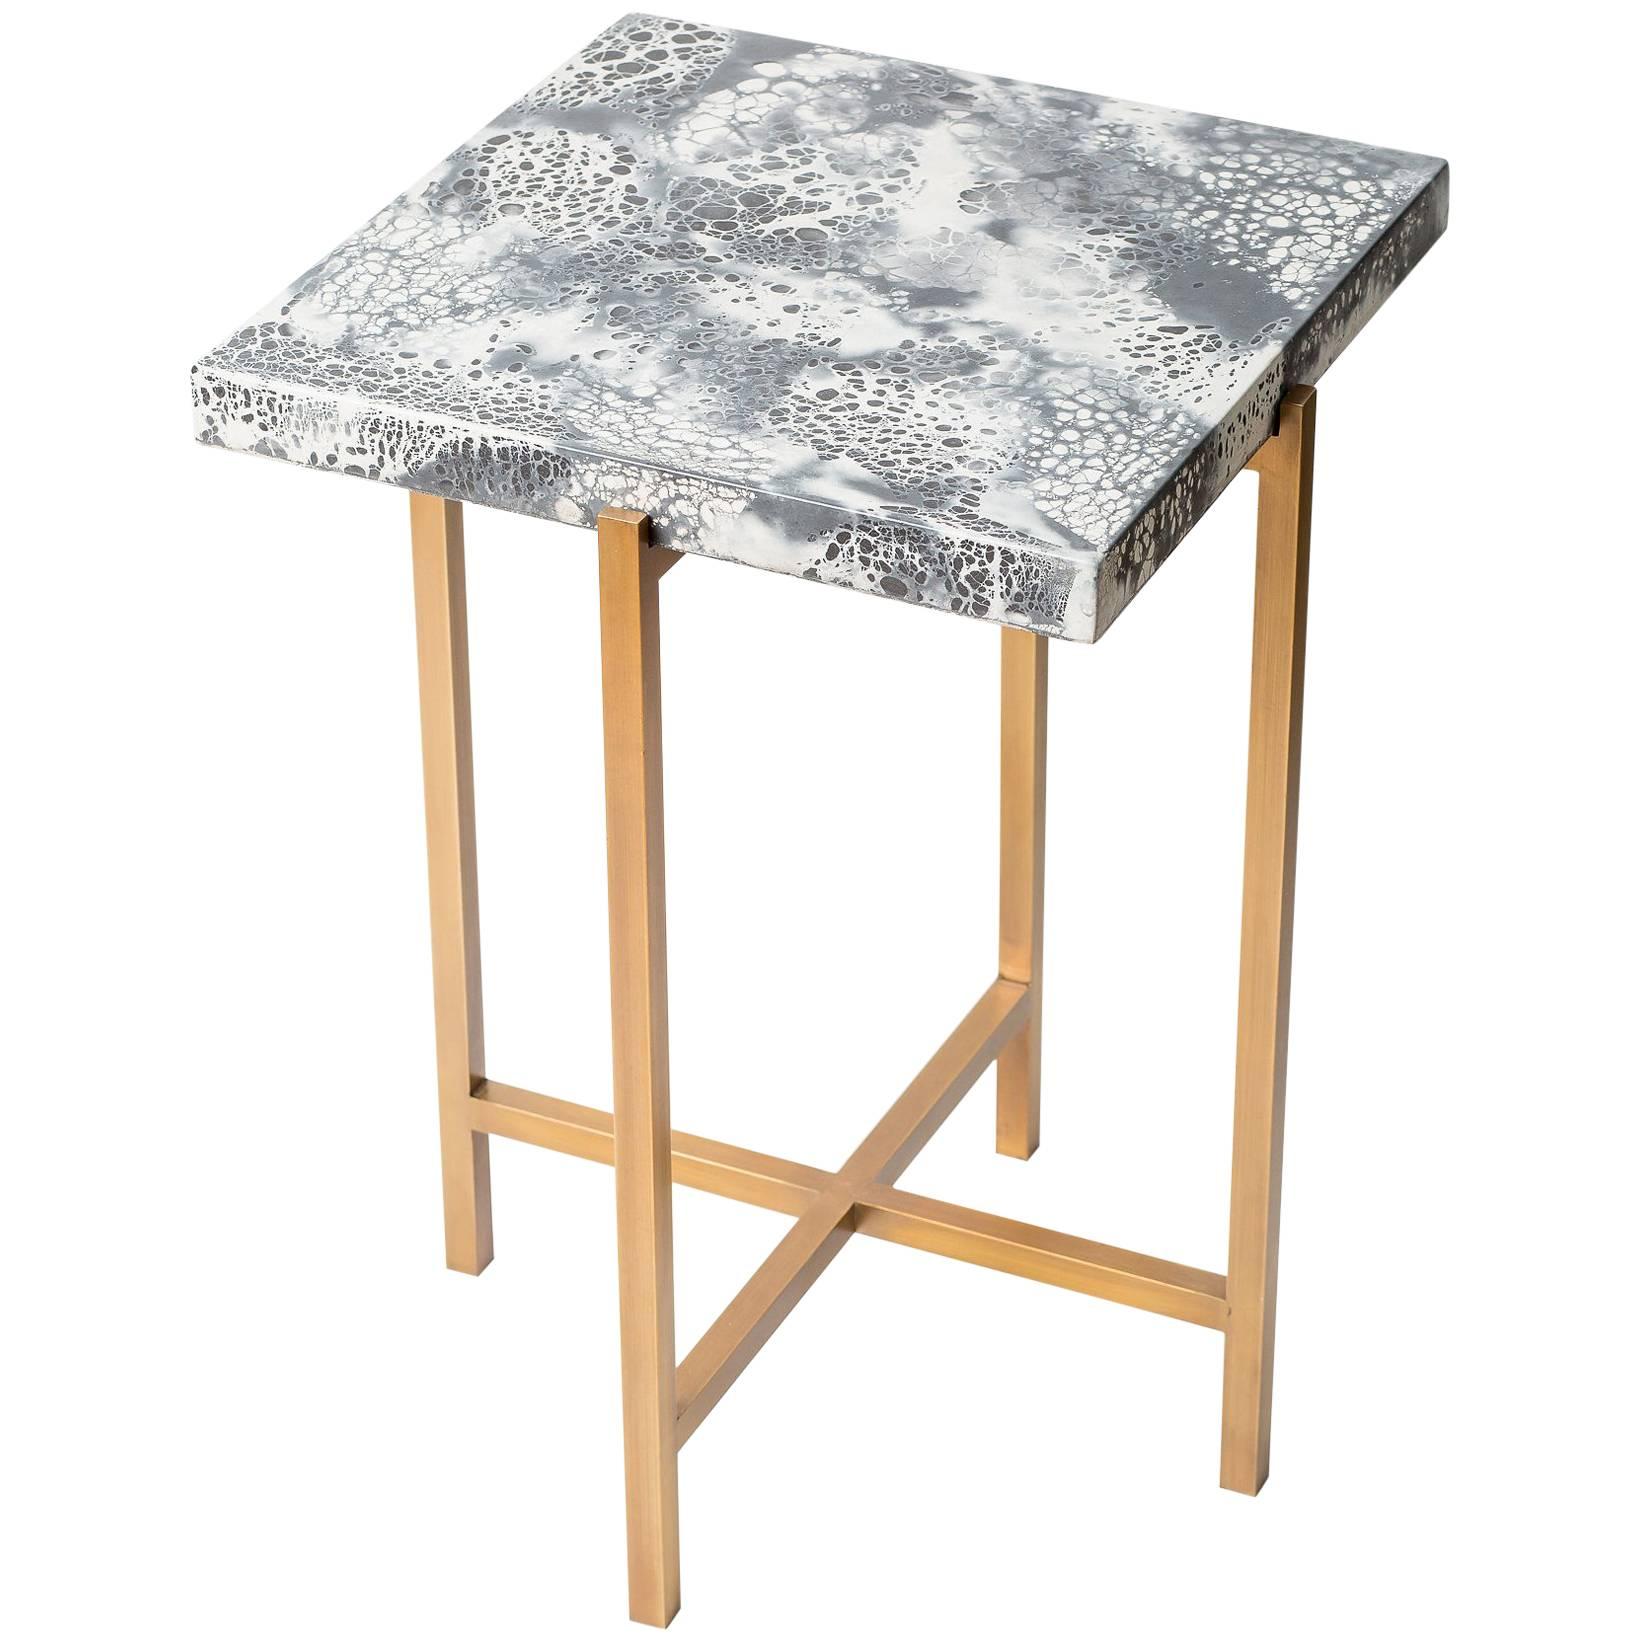 Square Concrete Table For Sale